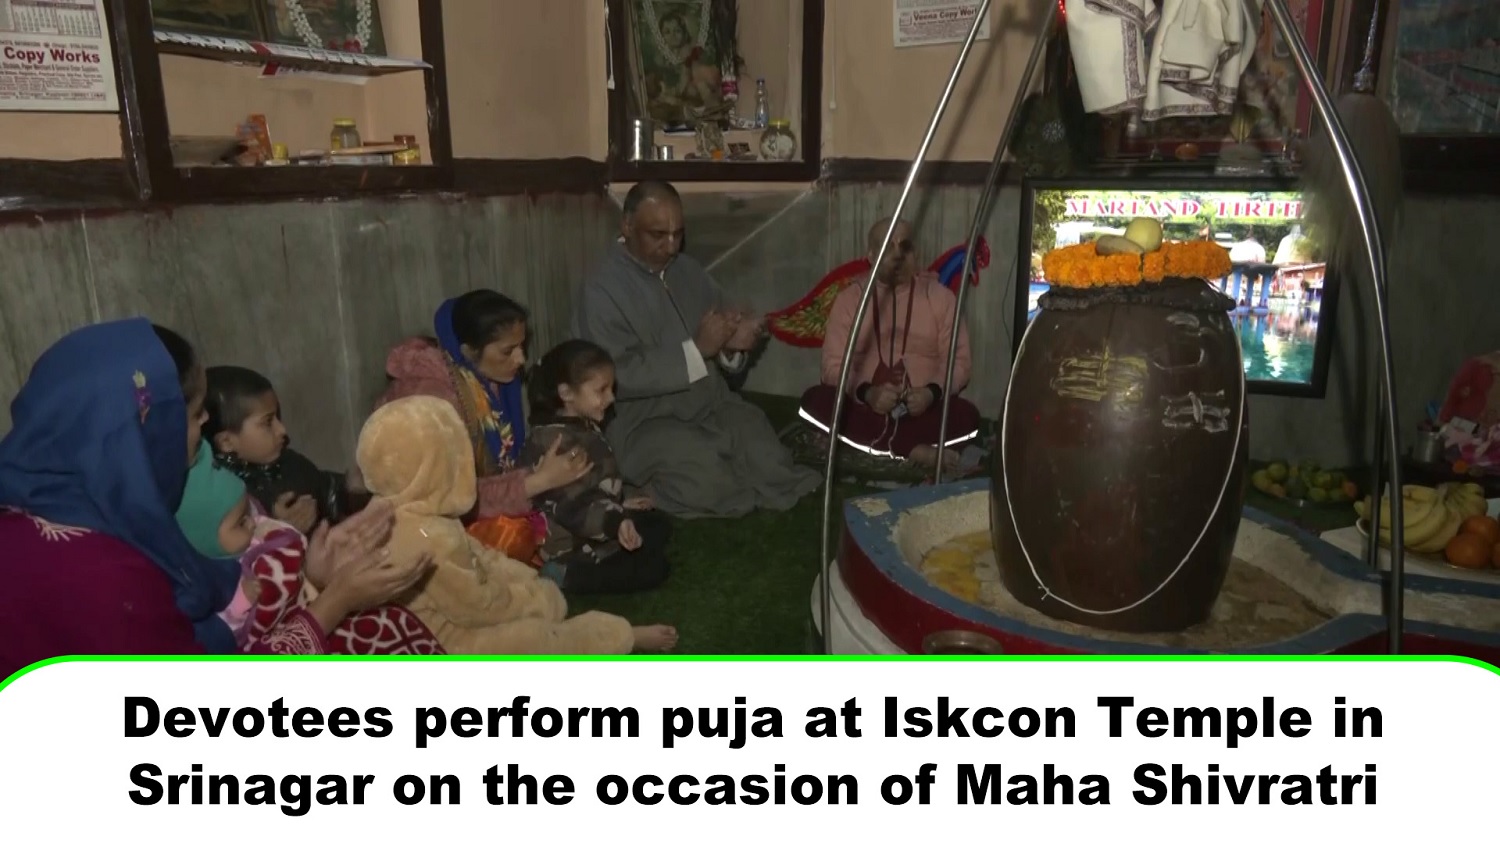 Devotees perform puja at Iskcon Temple in Srinagar on the occasion of Maha Shivratri